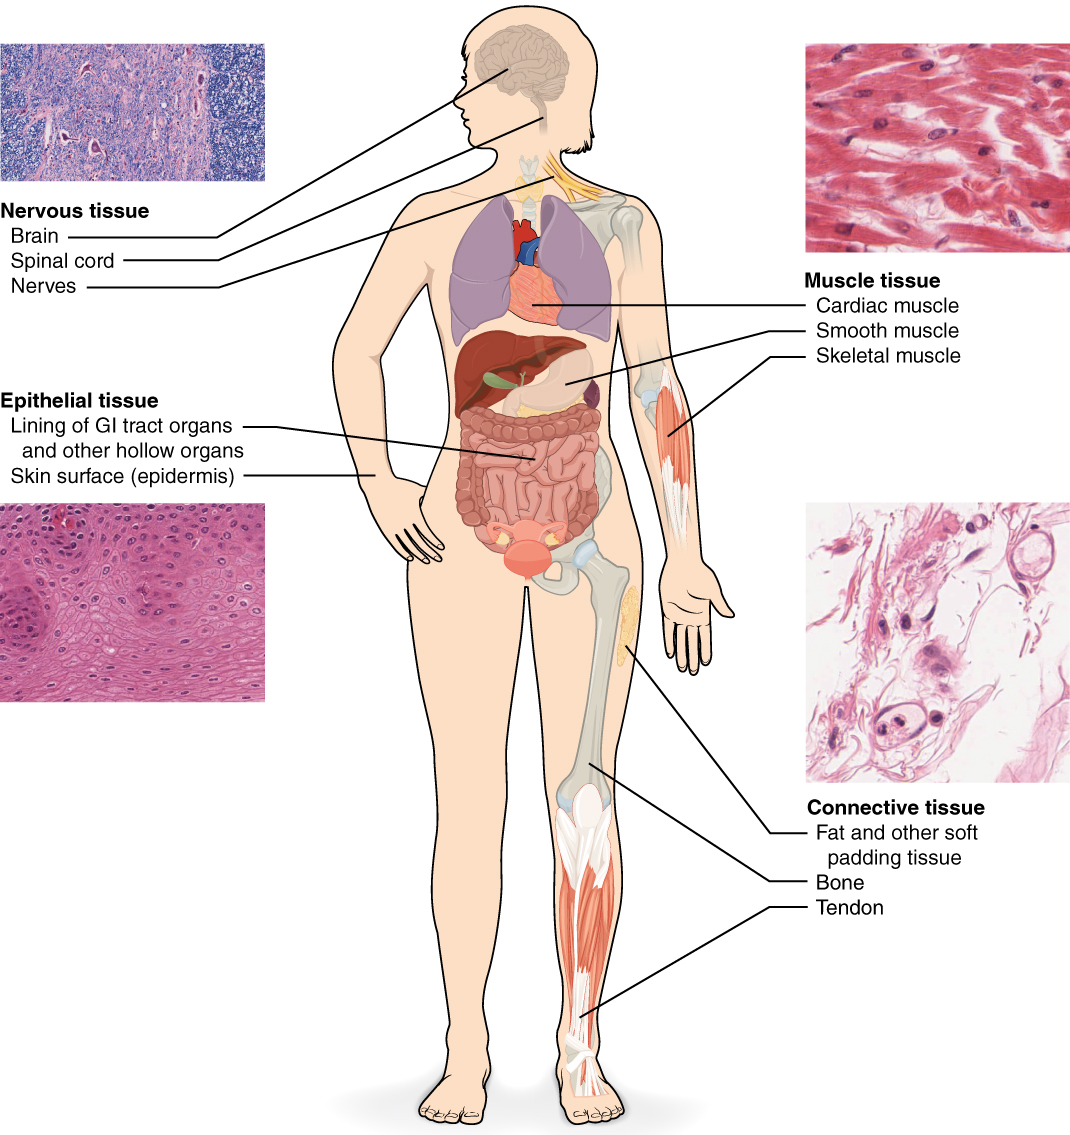 4 types of human tissue